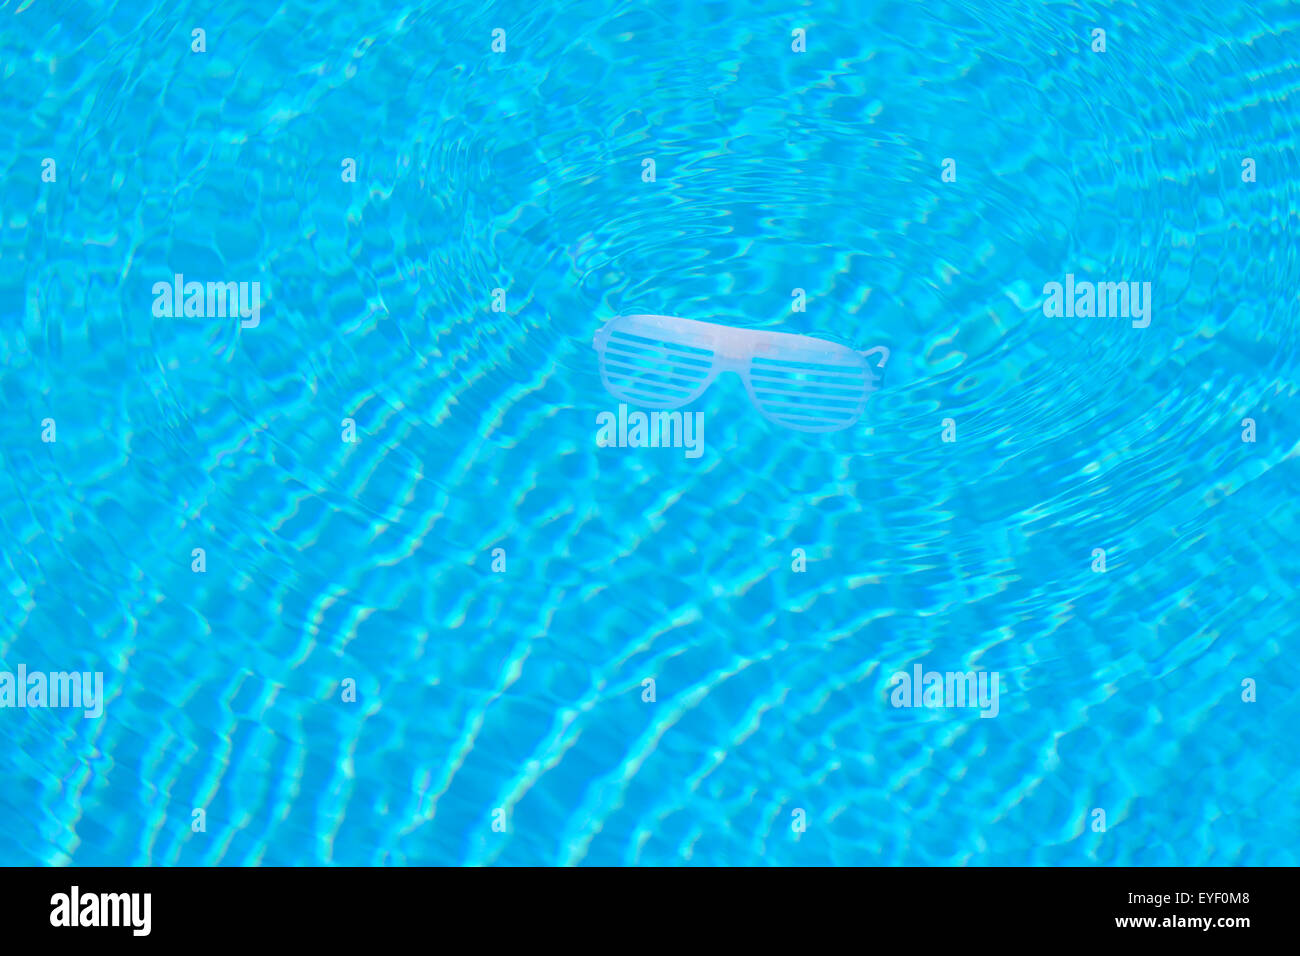 White rave dance shutter glasses floating in the swimming pool Stock Photo